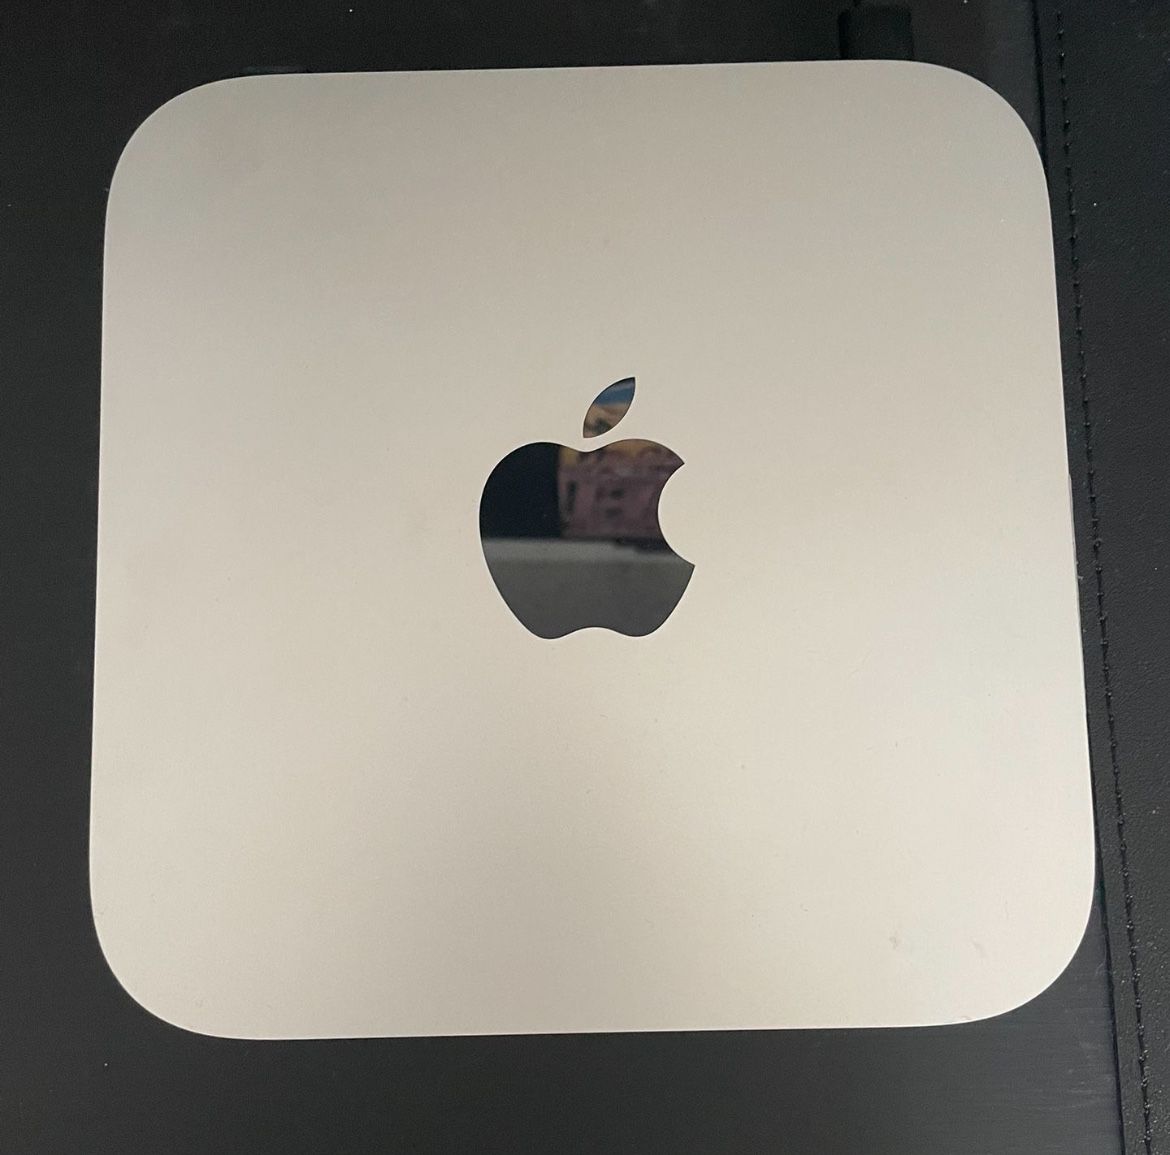 Apple Mac Mini  Fully Loaded 4 Music Recording/Video Editing/Film/Photos/Djn/ Pro Tools,Logic,Ableton,Final Cut,Antares,Fl Studio, Adobe More!